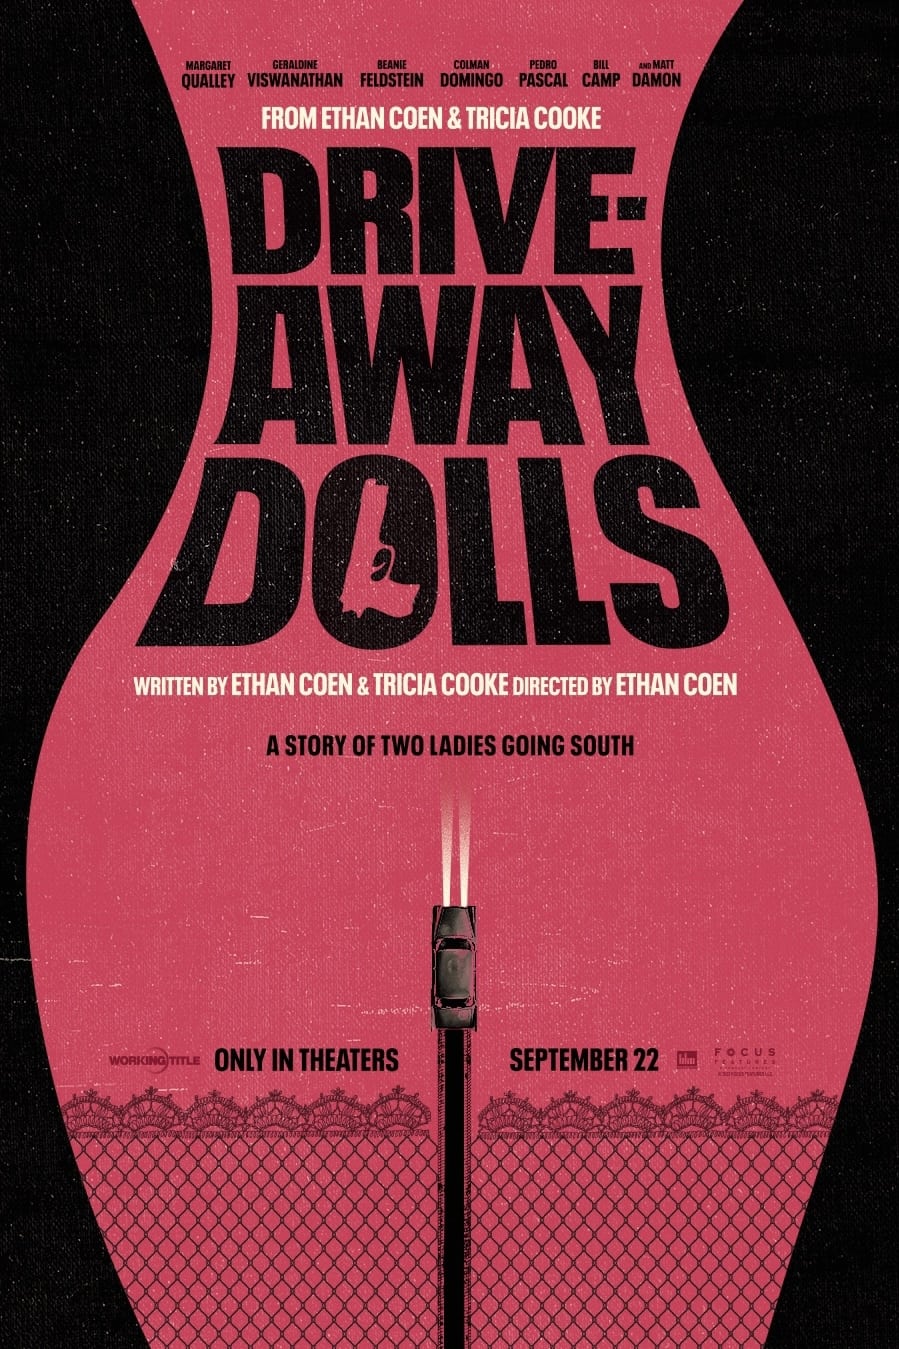 WATCH !! Drive-Away Dolls (2023) FULLMOVIE ONLINE FREE ENGLISH/Dub/SUB Crime STREAMINGS Movie Poster